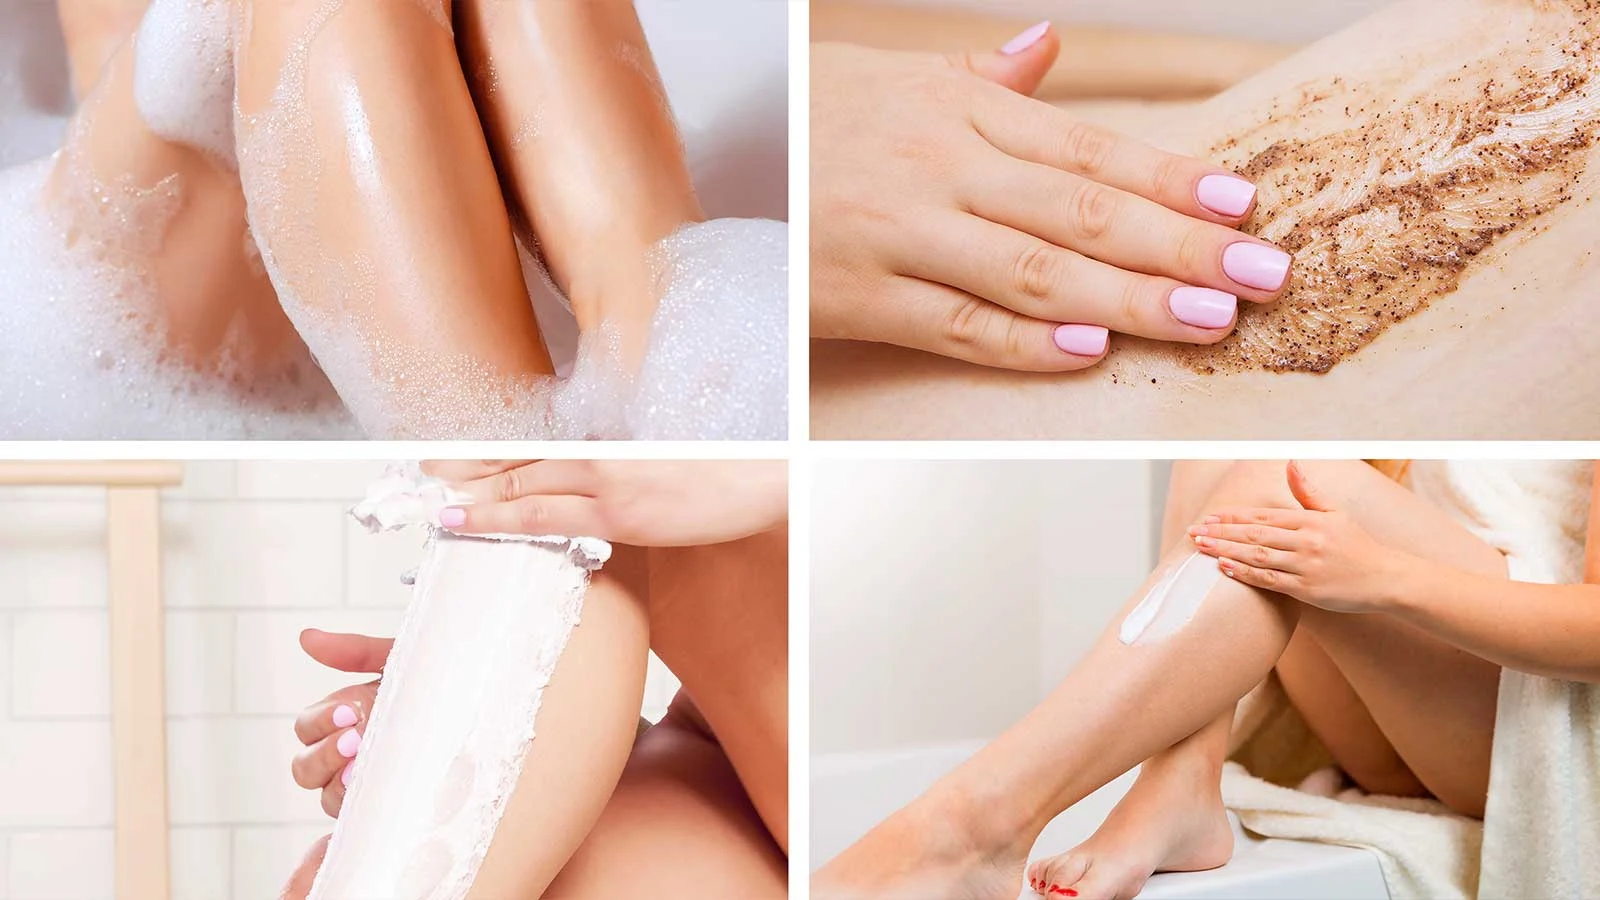 4 Steps Shaving Process Includes Bathing, Shaving Gel Application, Shaving, Moisturizing